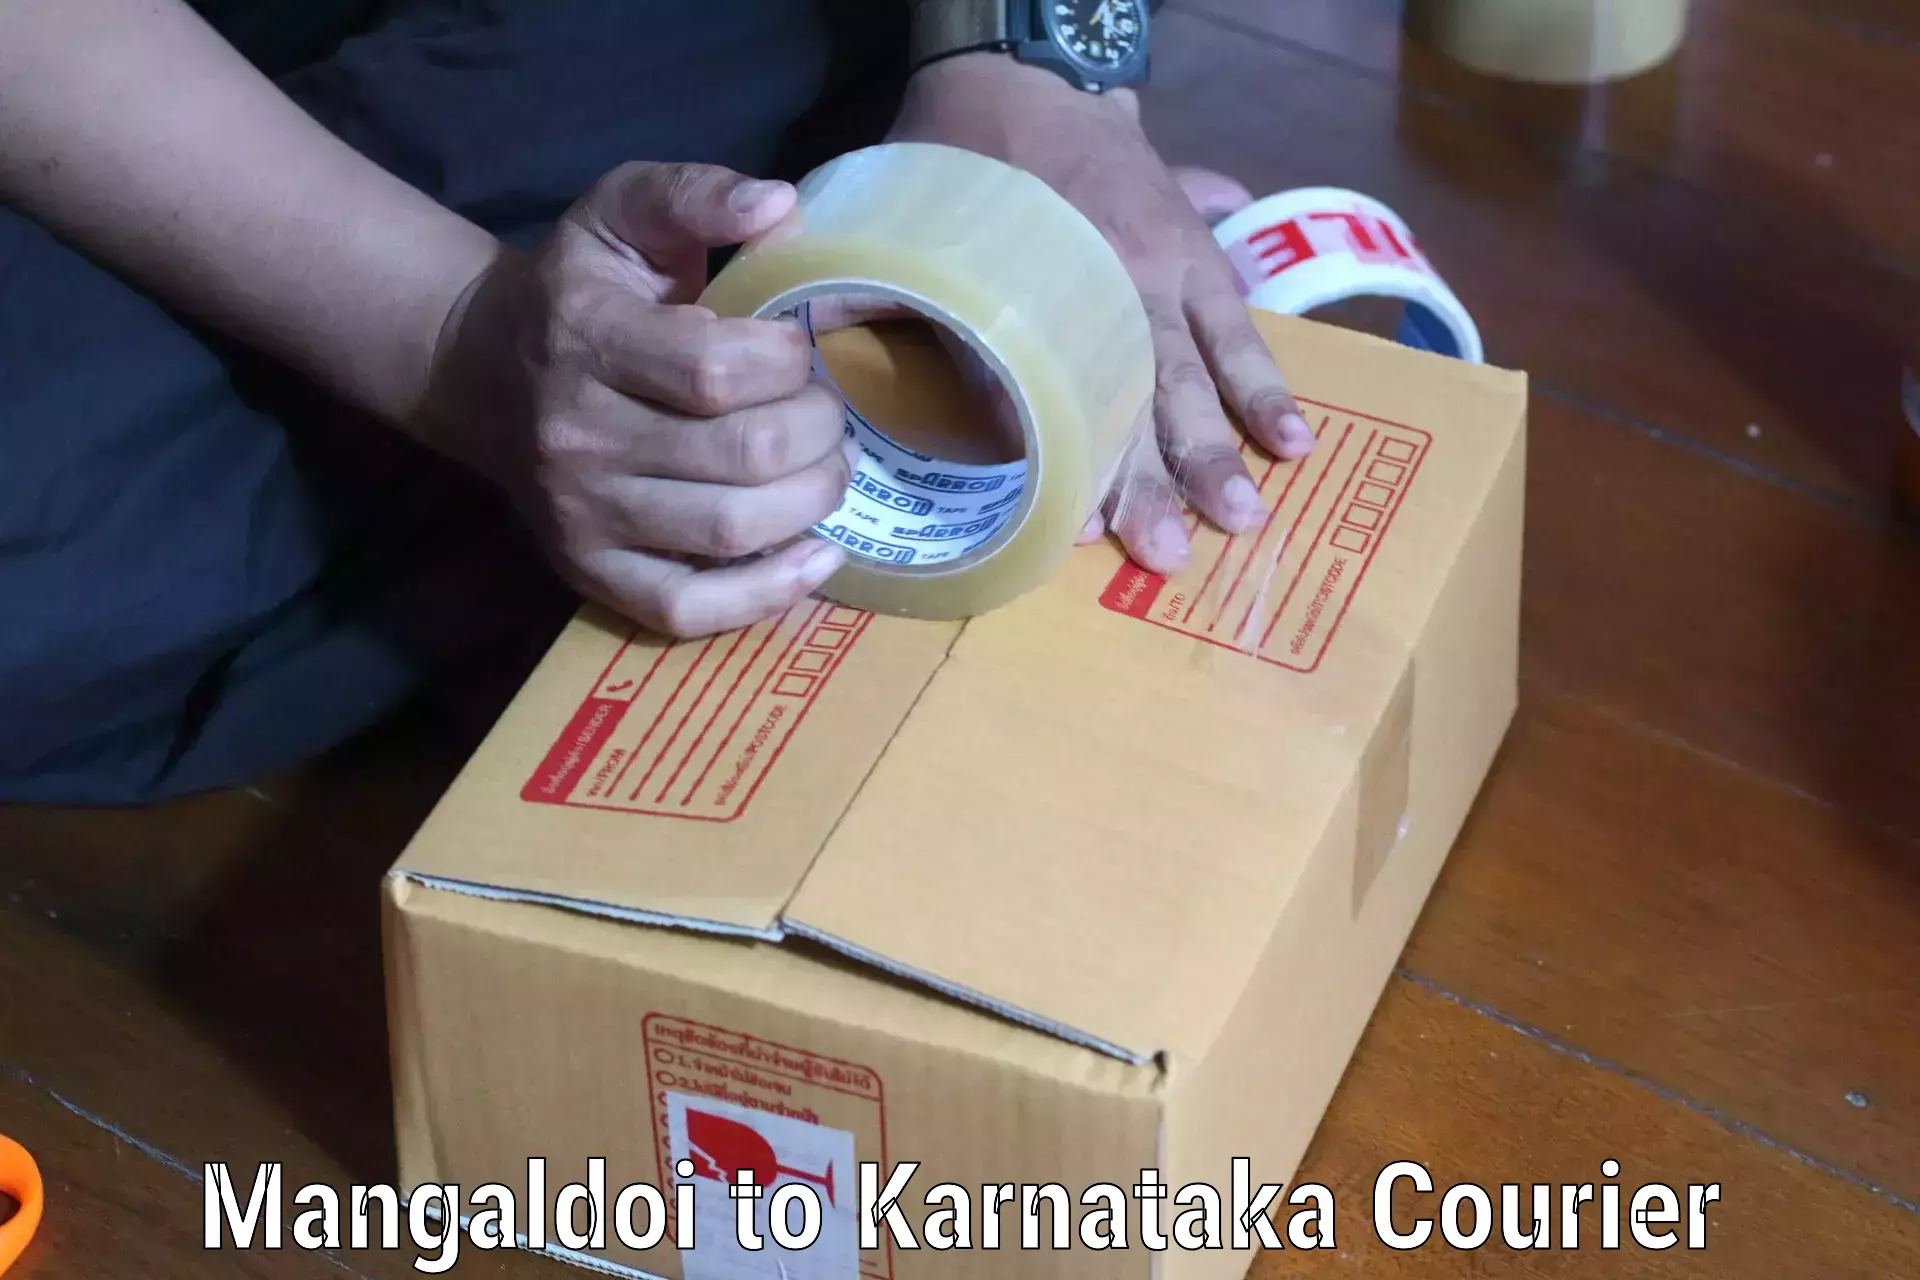 Reliable delivery network Mangaldoi to Devanahalli